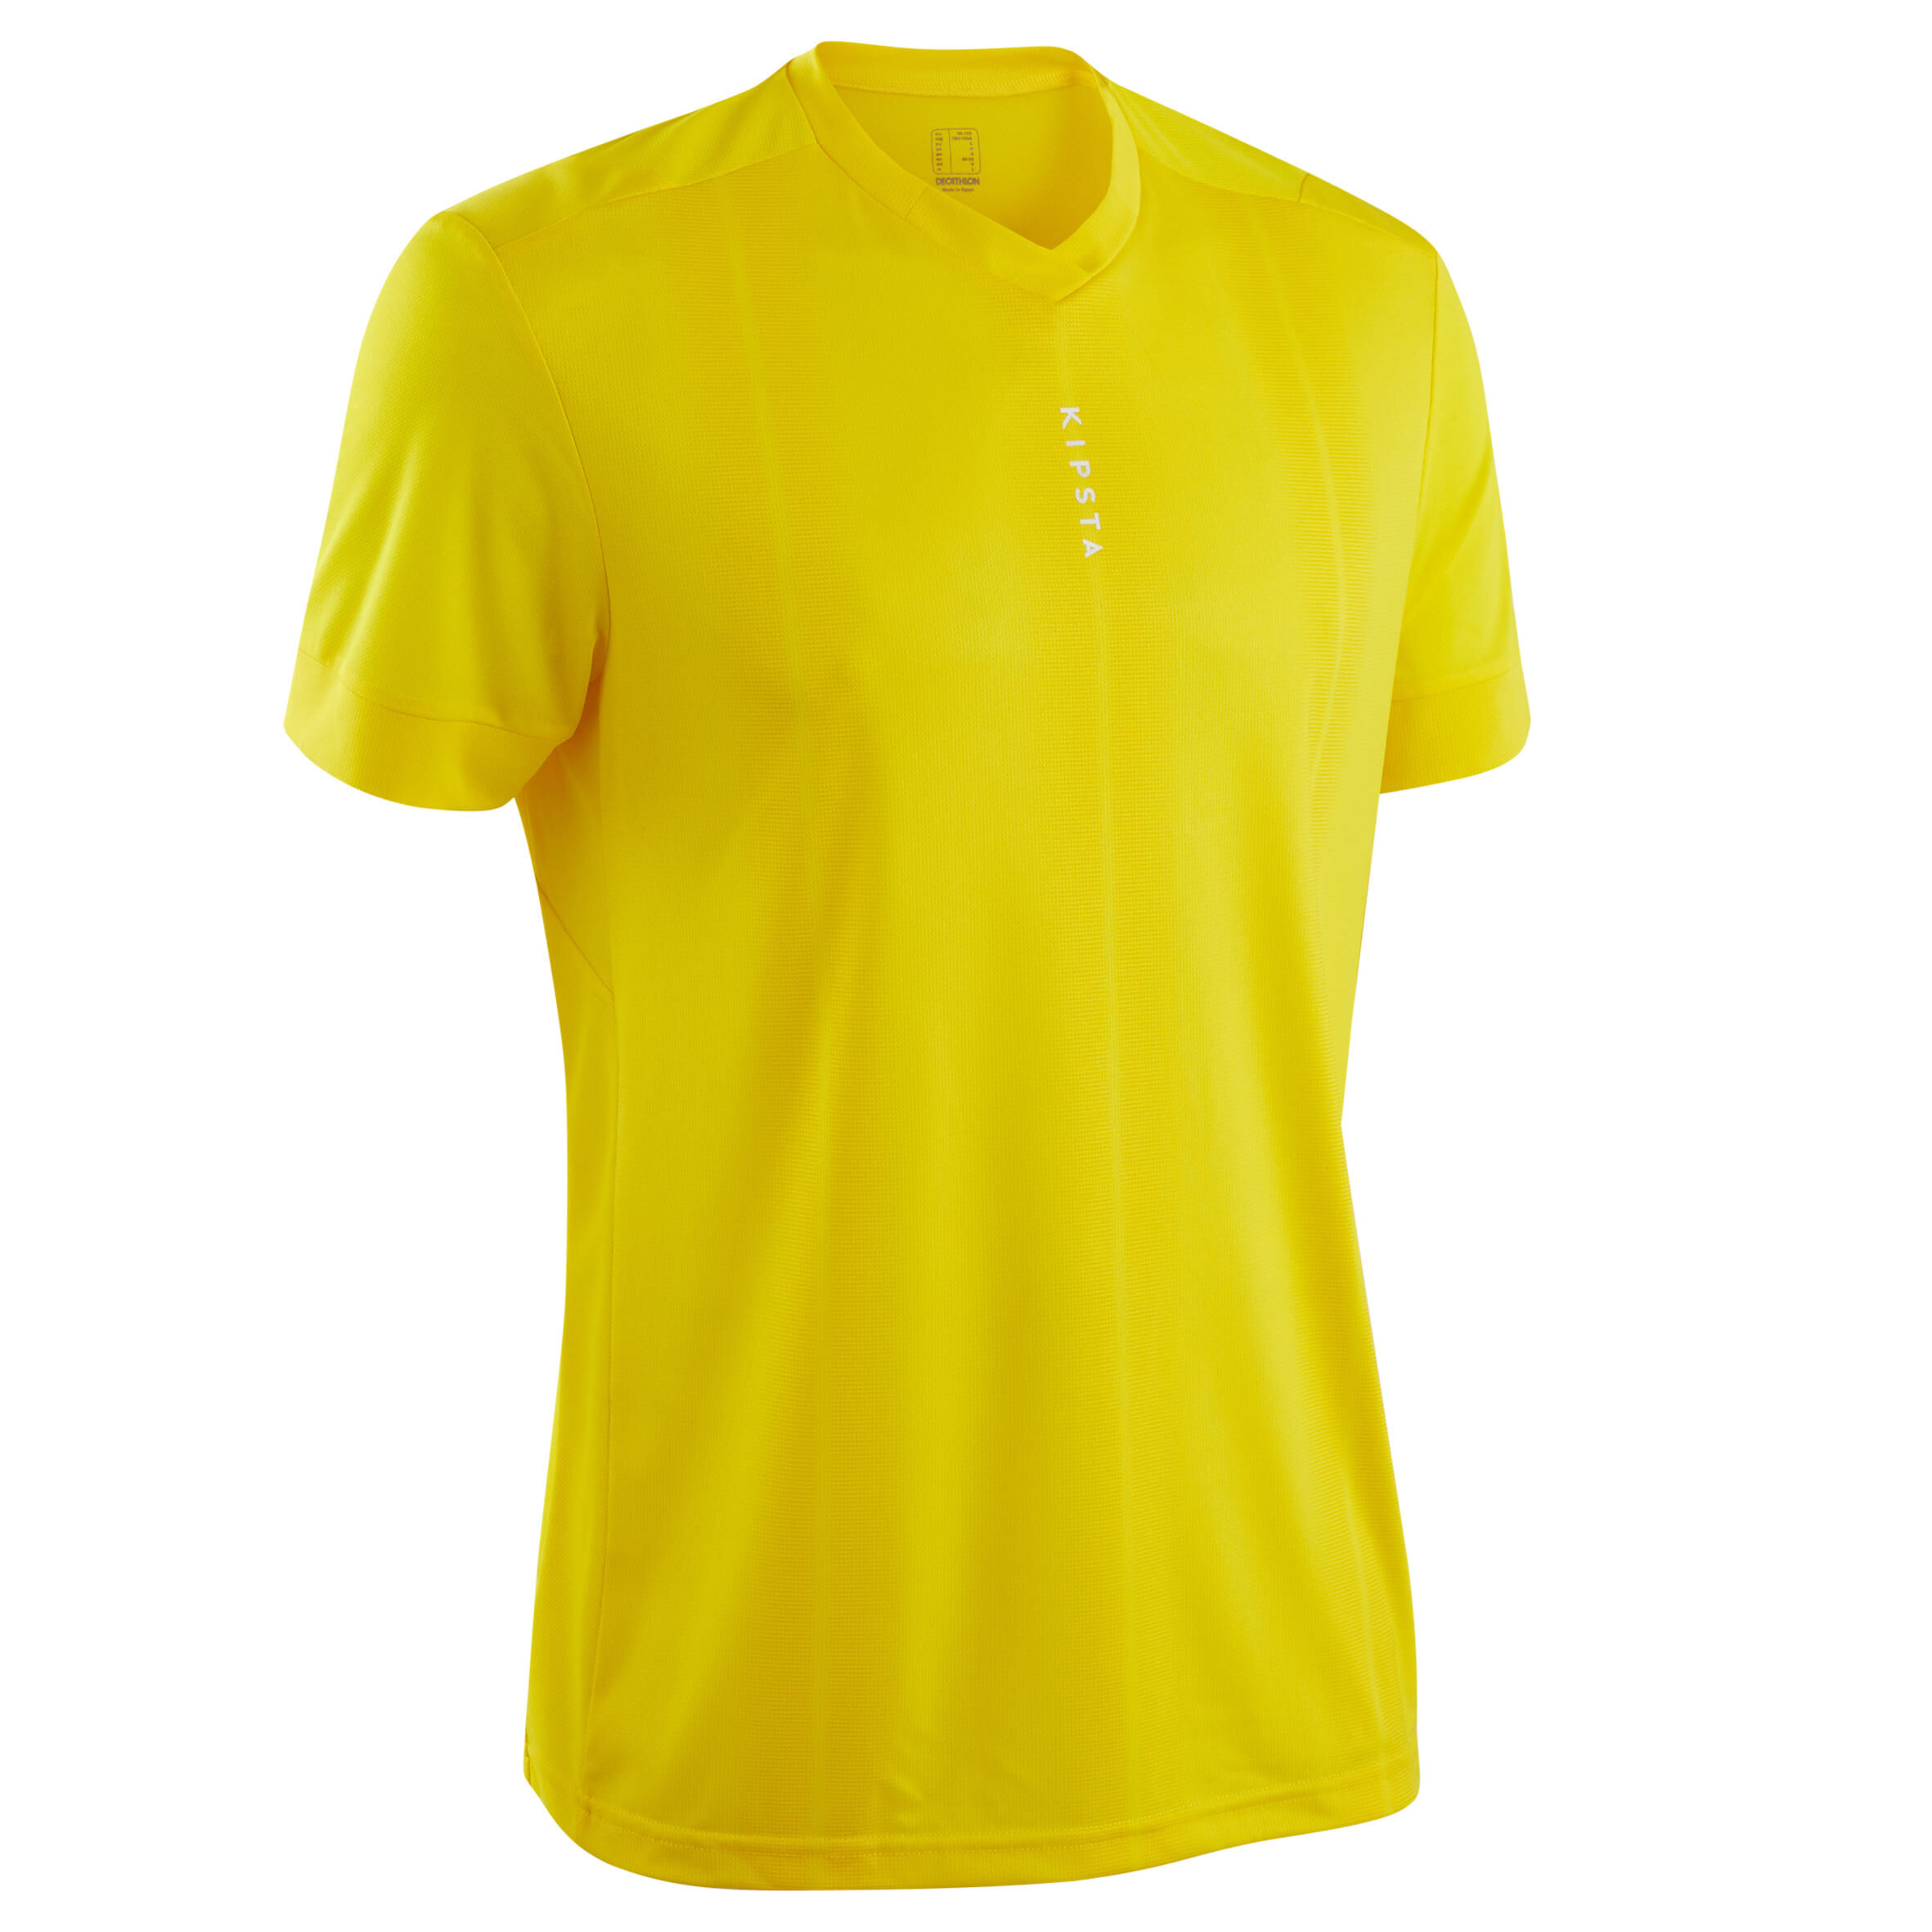 KIPSTA Adult Football Shirt F500 - Plain Yellow